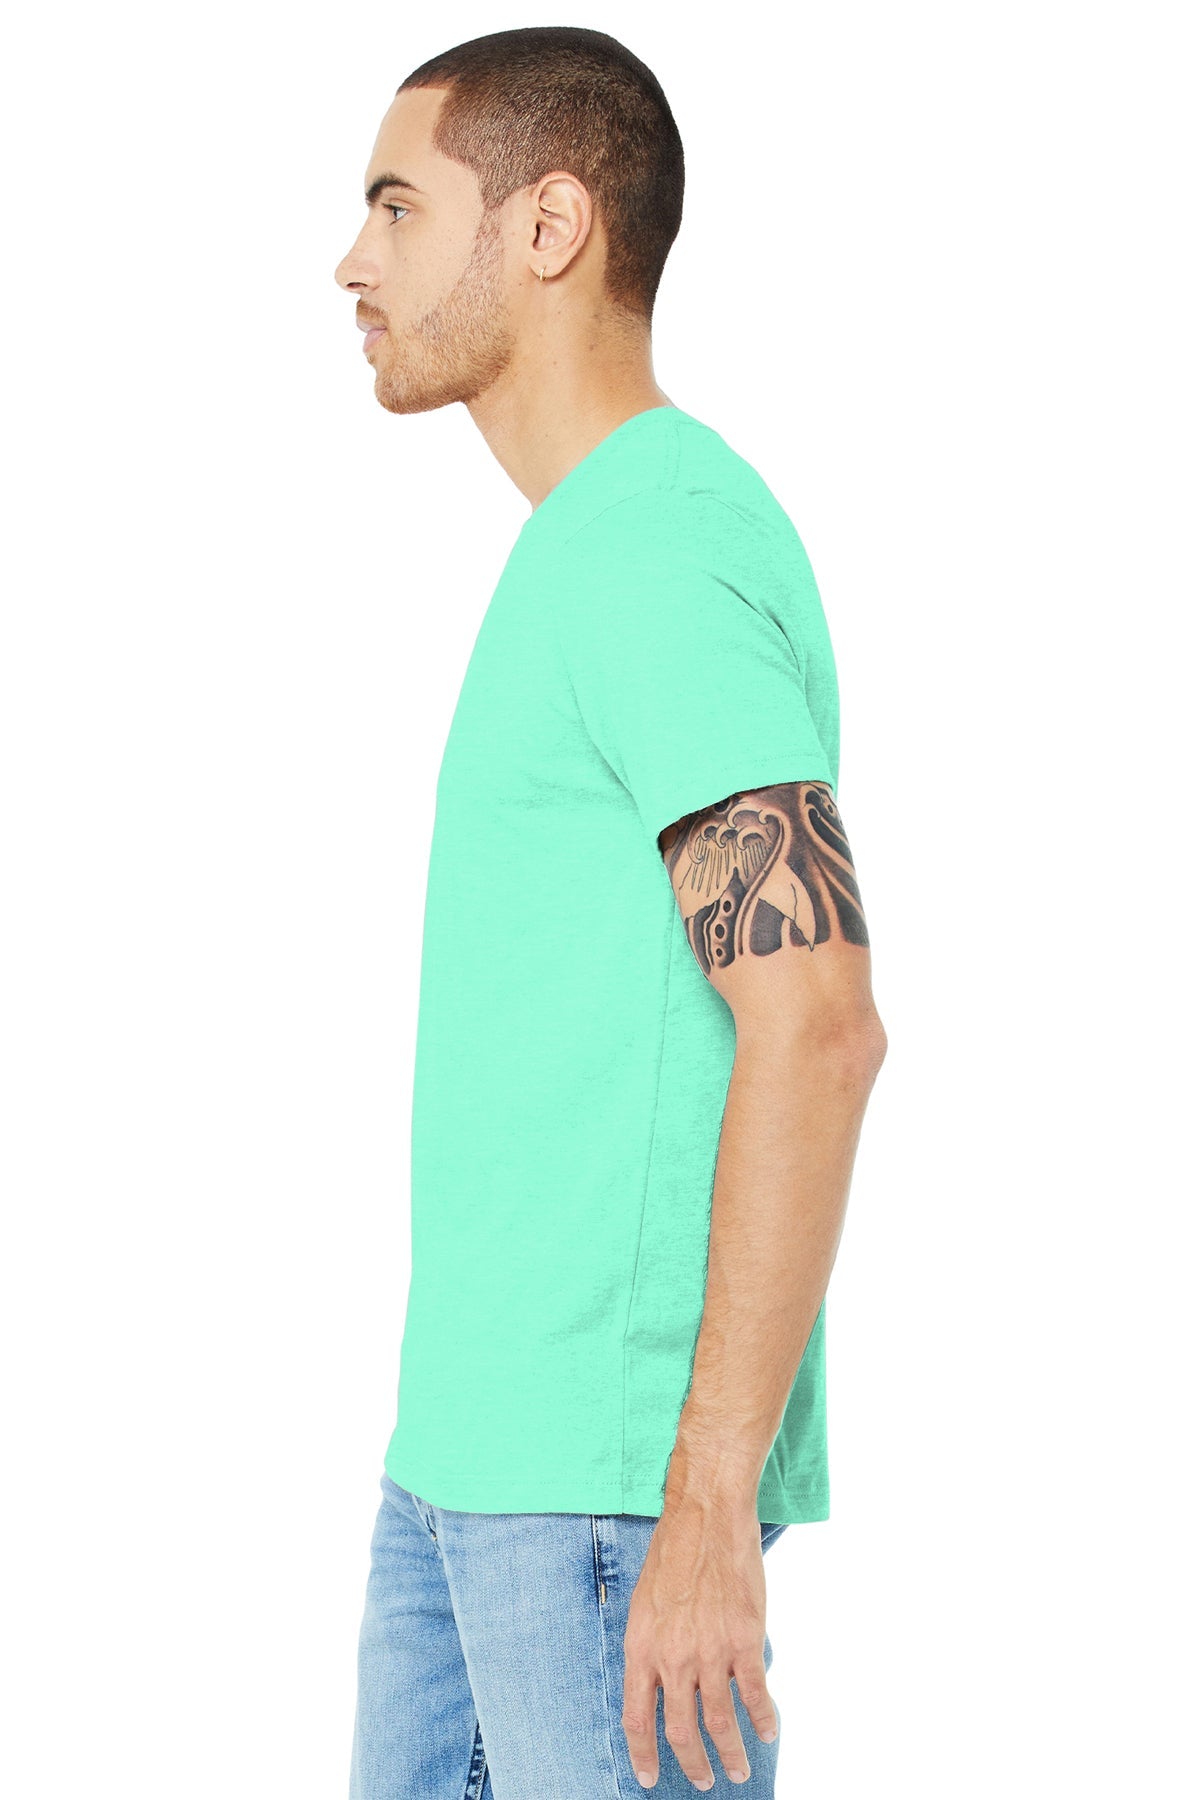 bella + canvas unisex jersey short sleeve t-shirt 3001c heather mint